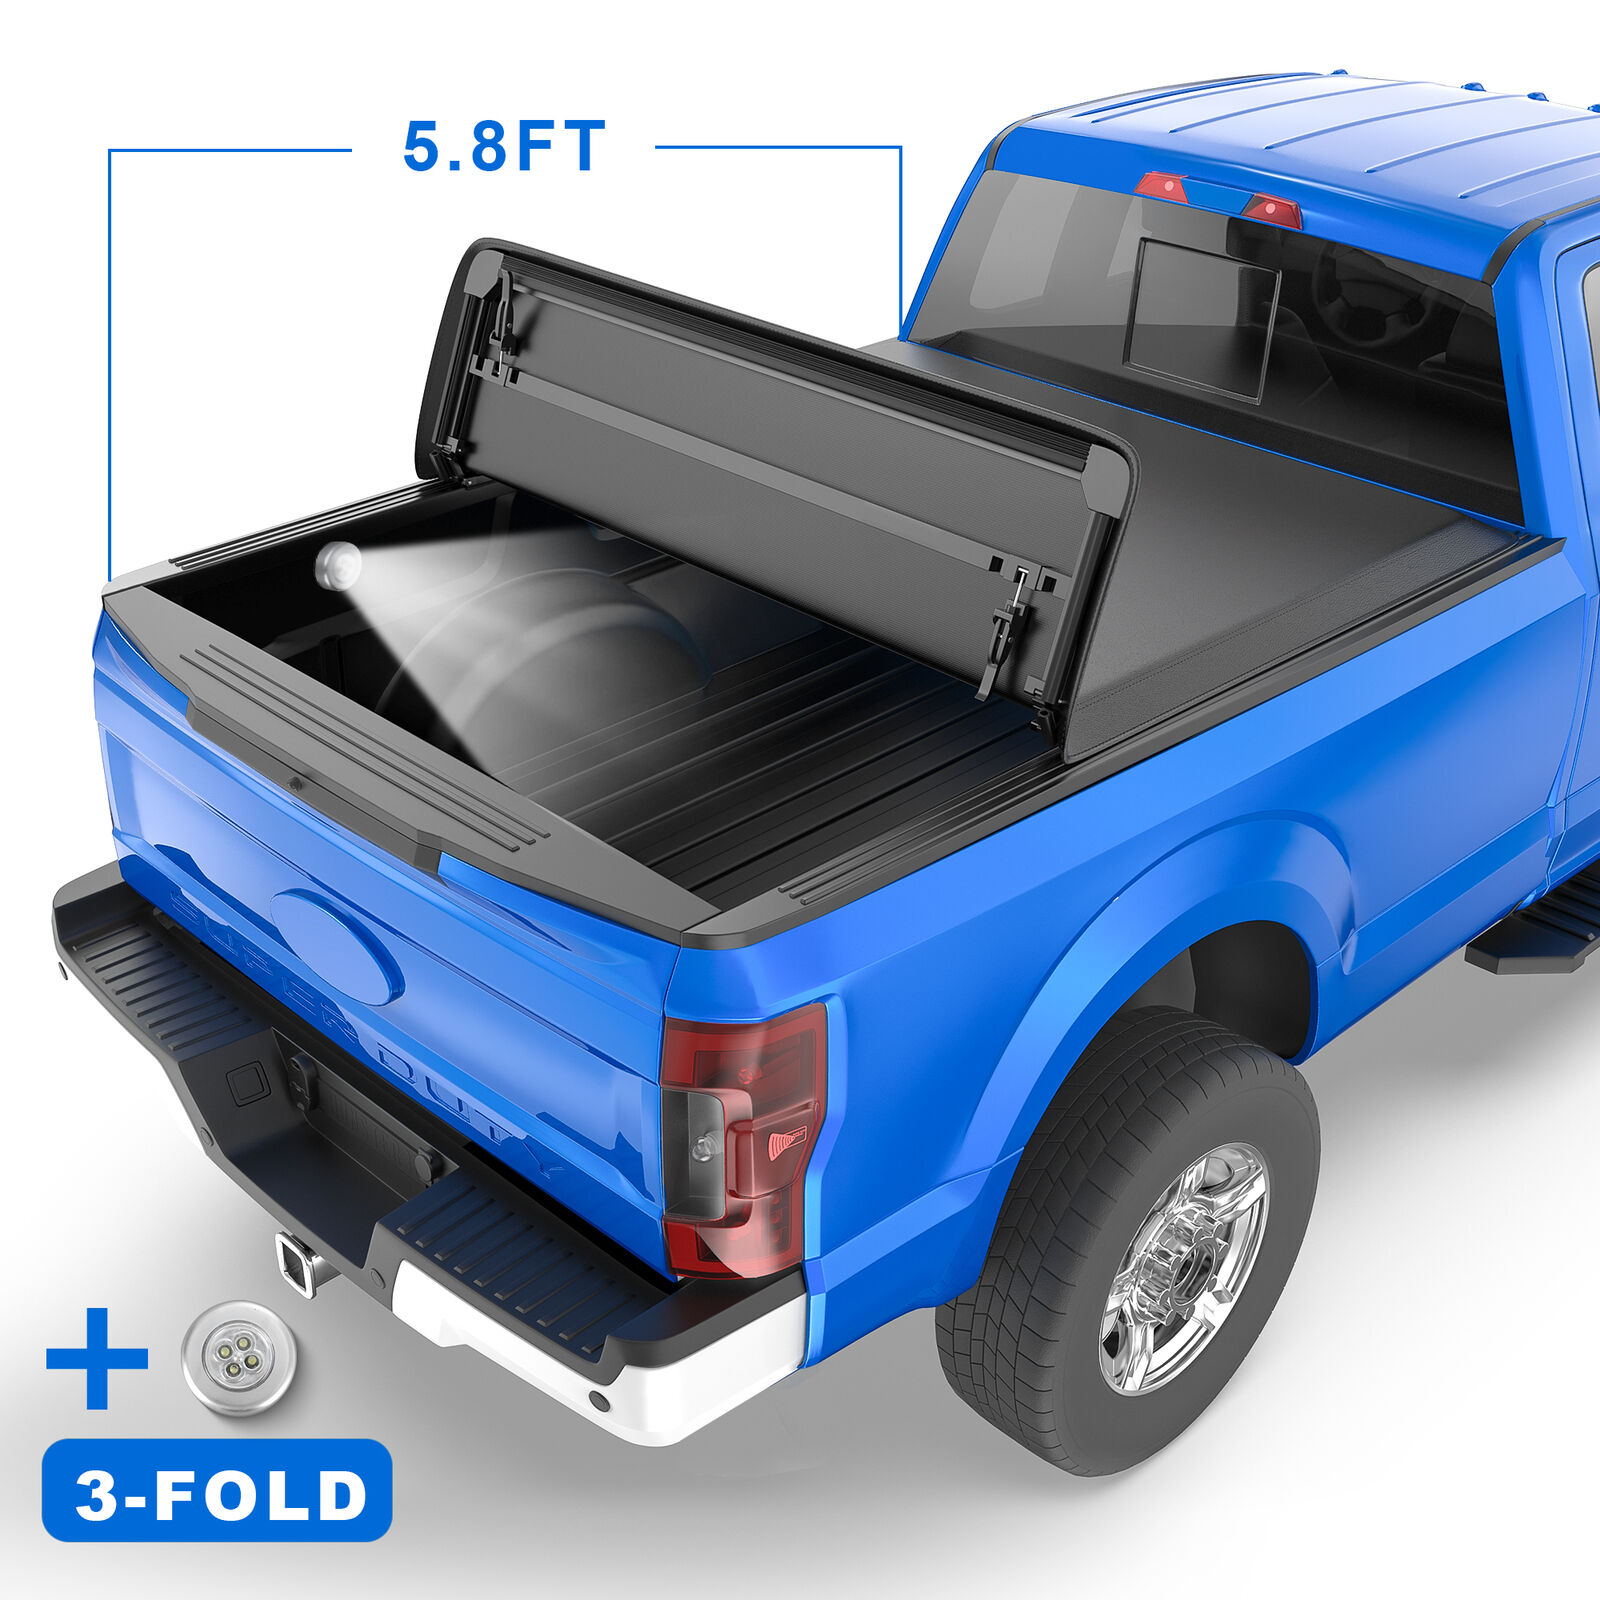 5.8FT 5.7FT 3-FOLD For 2004-2007 Silverado Sierra Soft Truck Bed Tonneau Cover